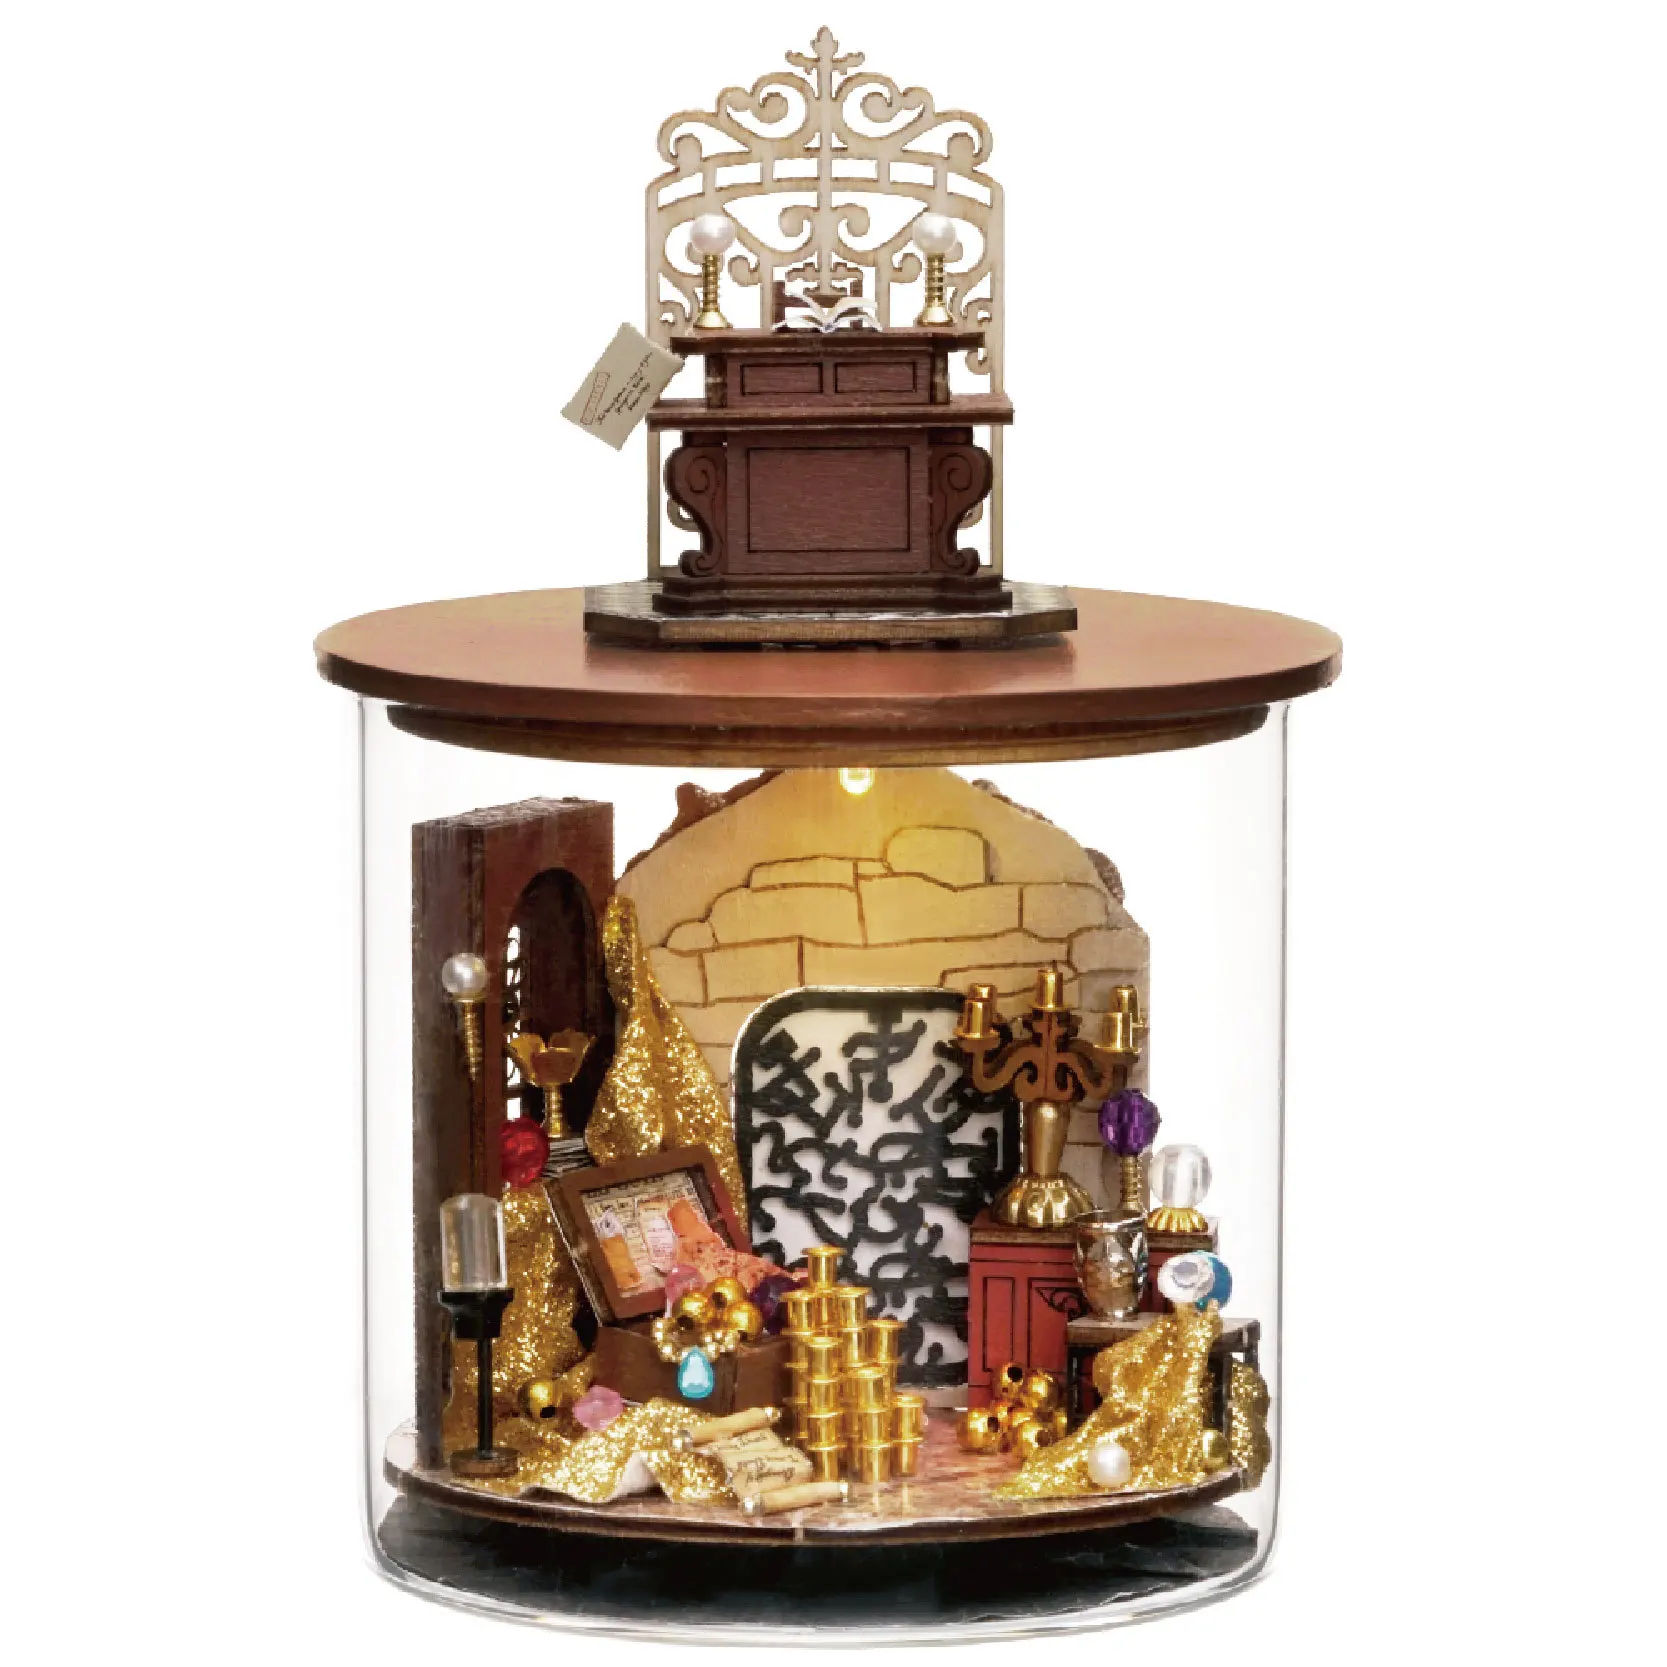 

DIY Wooden Dollhouse Miniature with Furniture Kit Magic House Dream Bottle Assemble Toys for Children Girl Birthday Gift